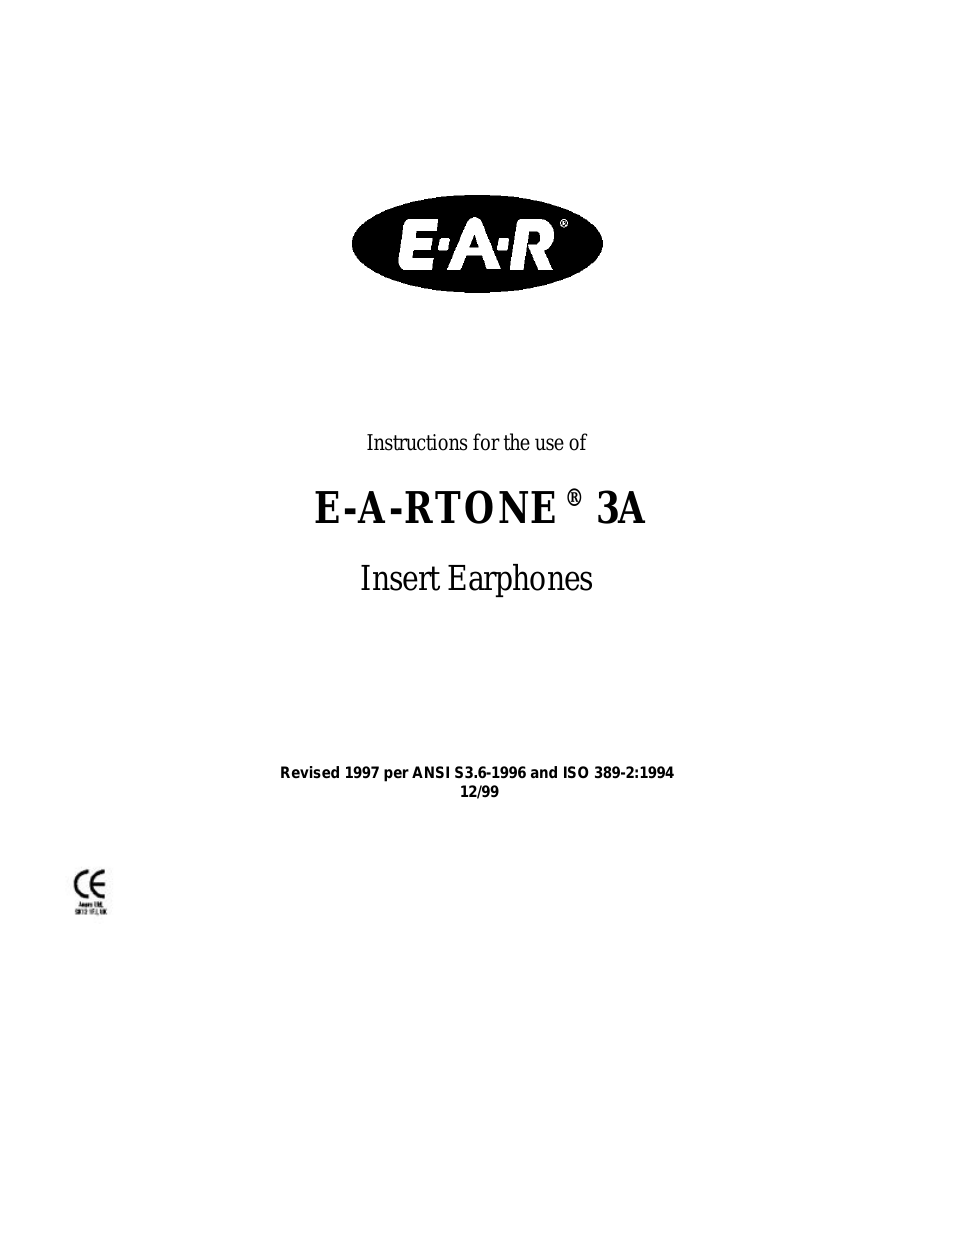 E-A-RTONE 3A